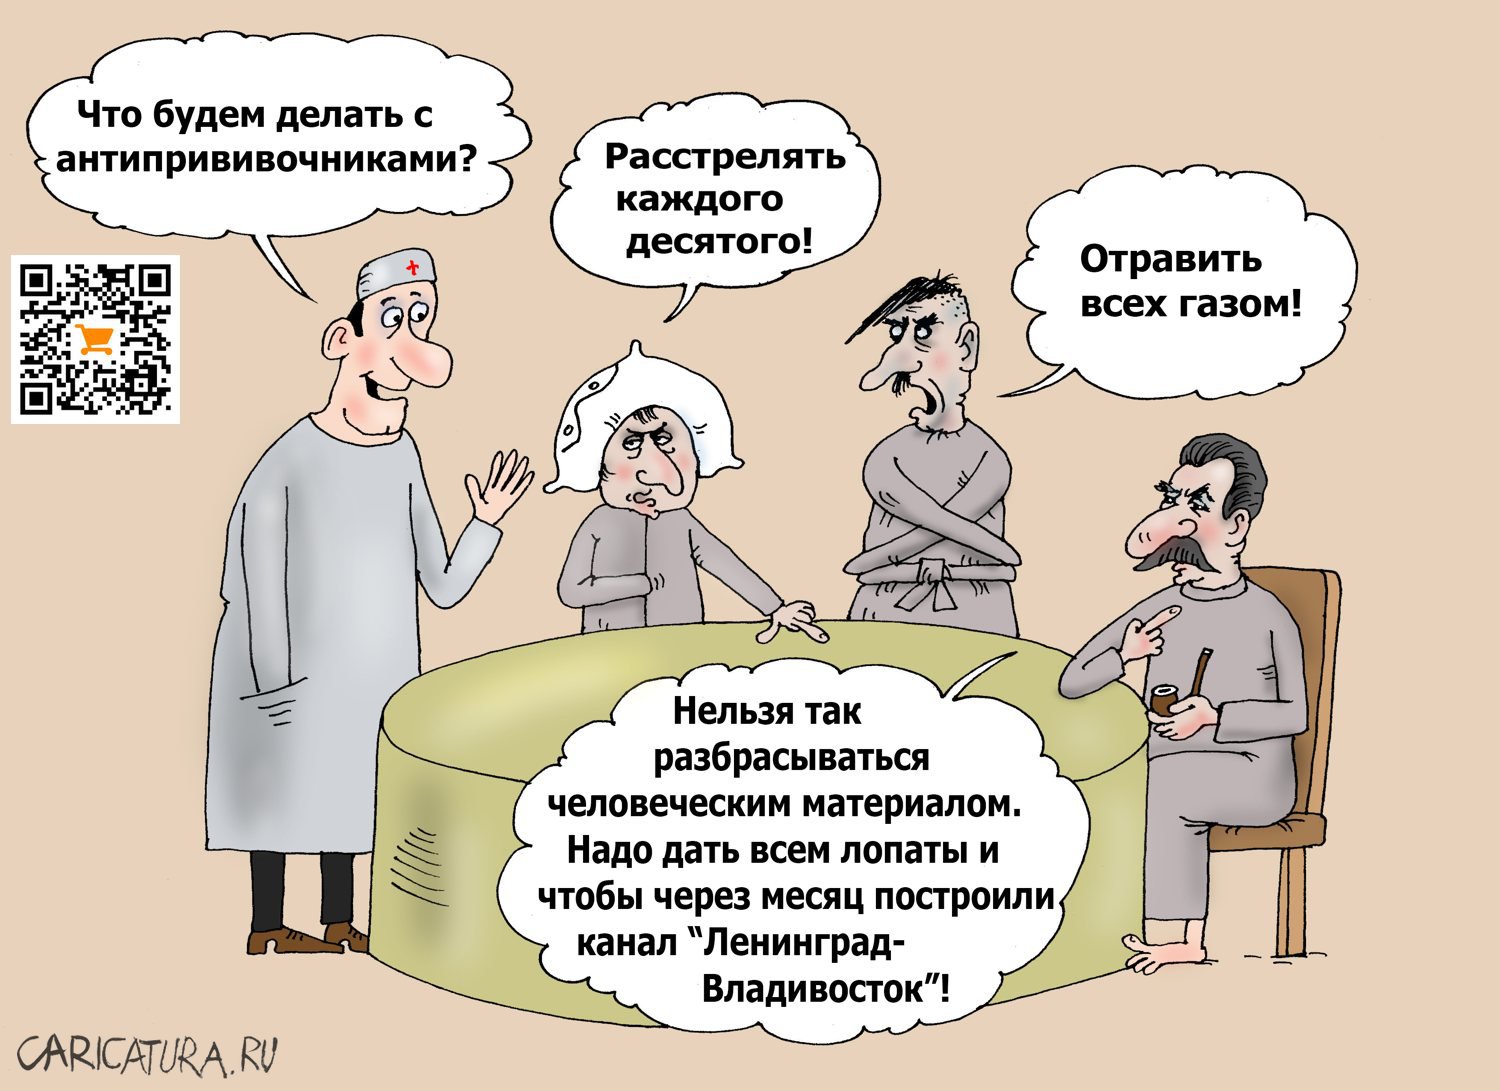 Карикатура "Картинка из сумасшедшего дома", Валерий Тарасенко